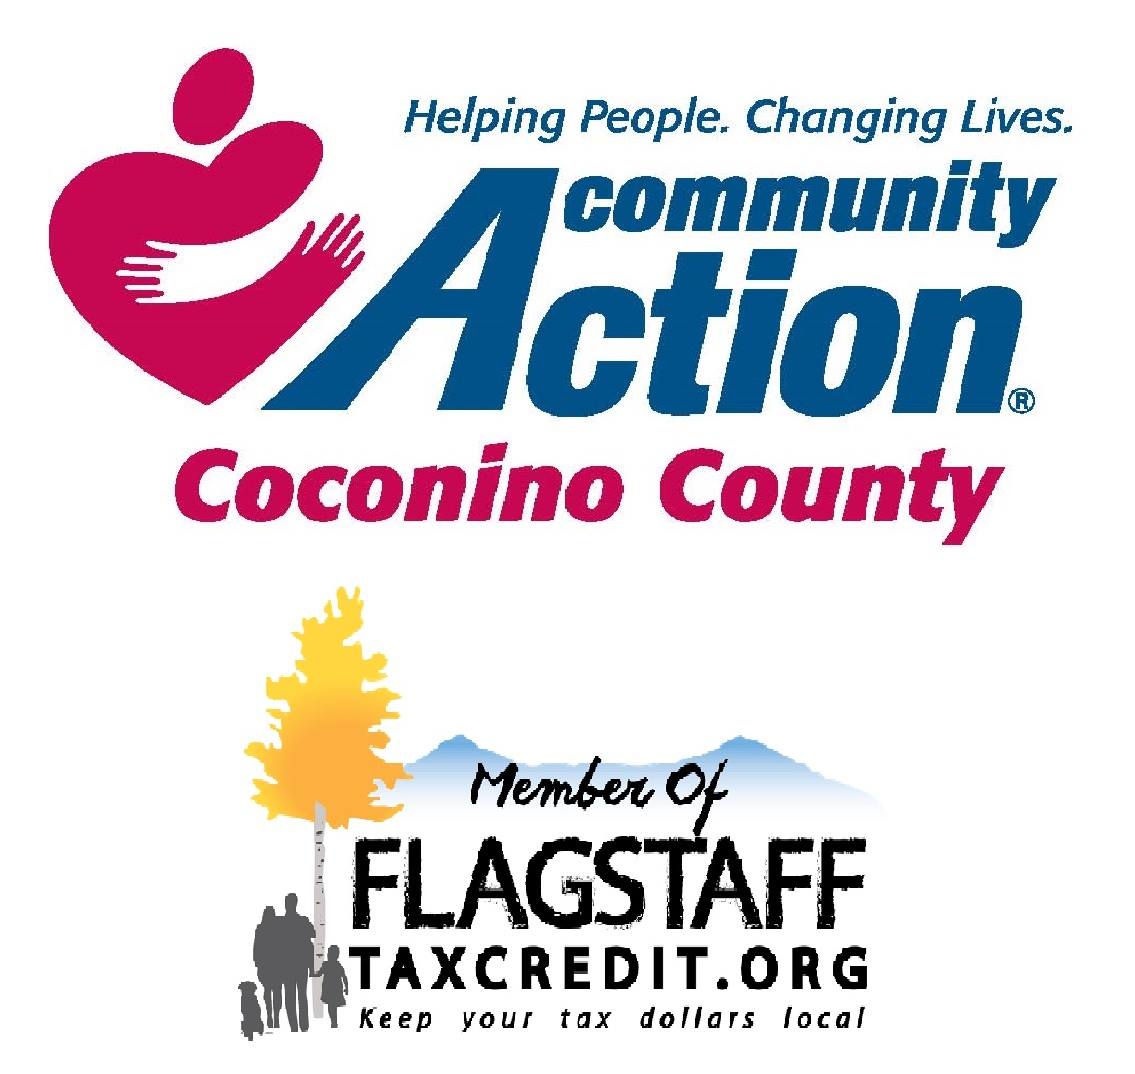 Coconino County Community Services Dept